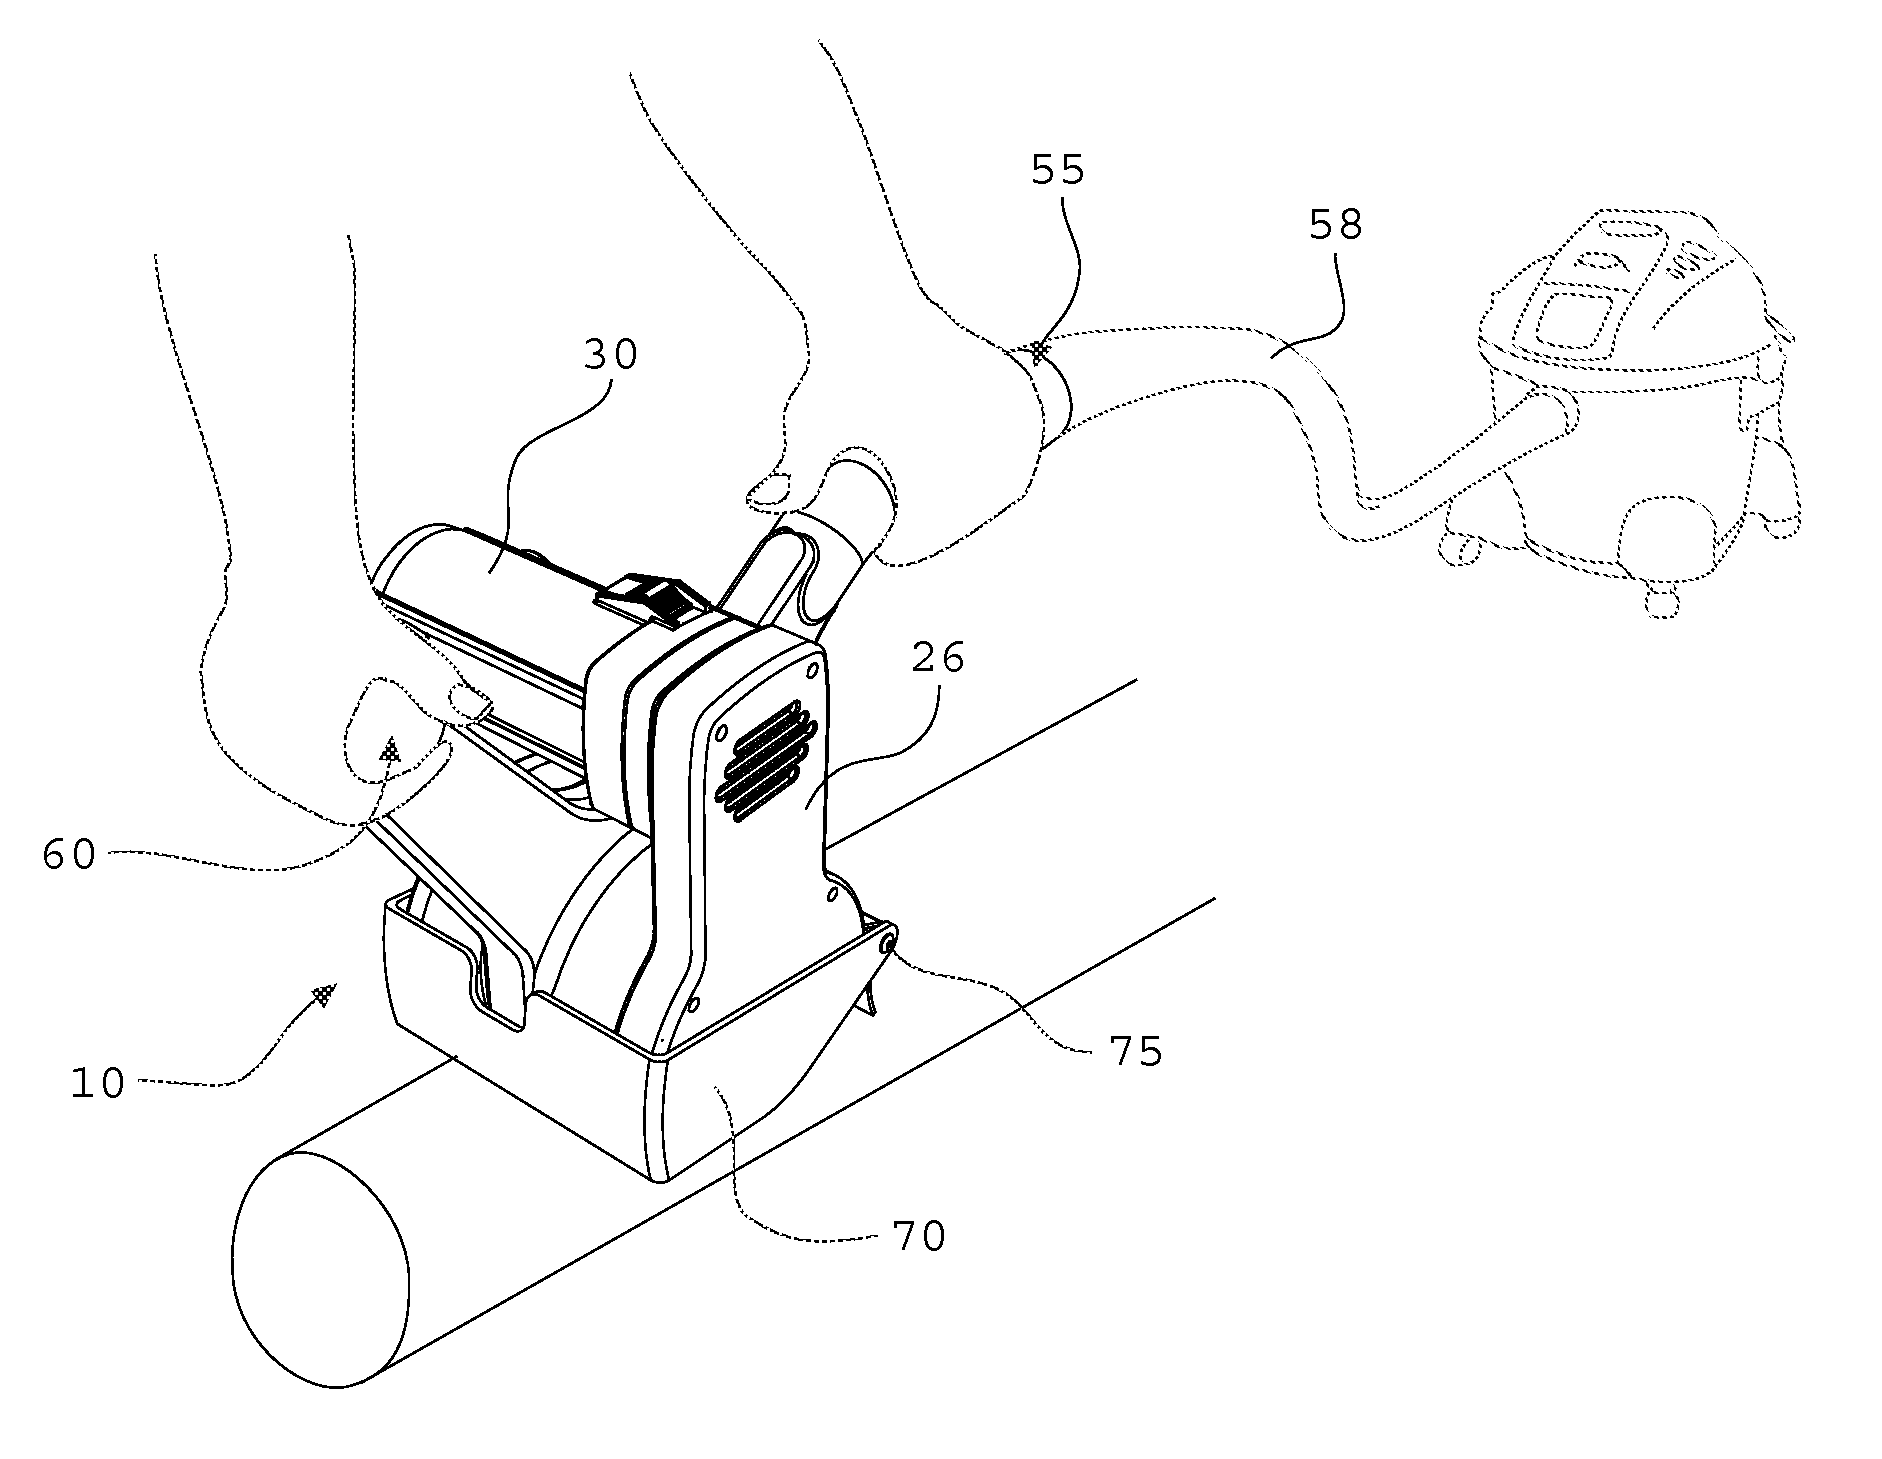 Surface preparation apparatus